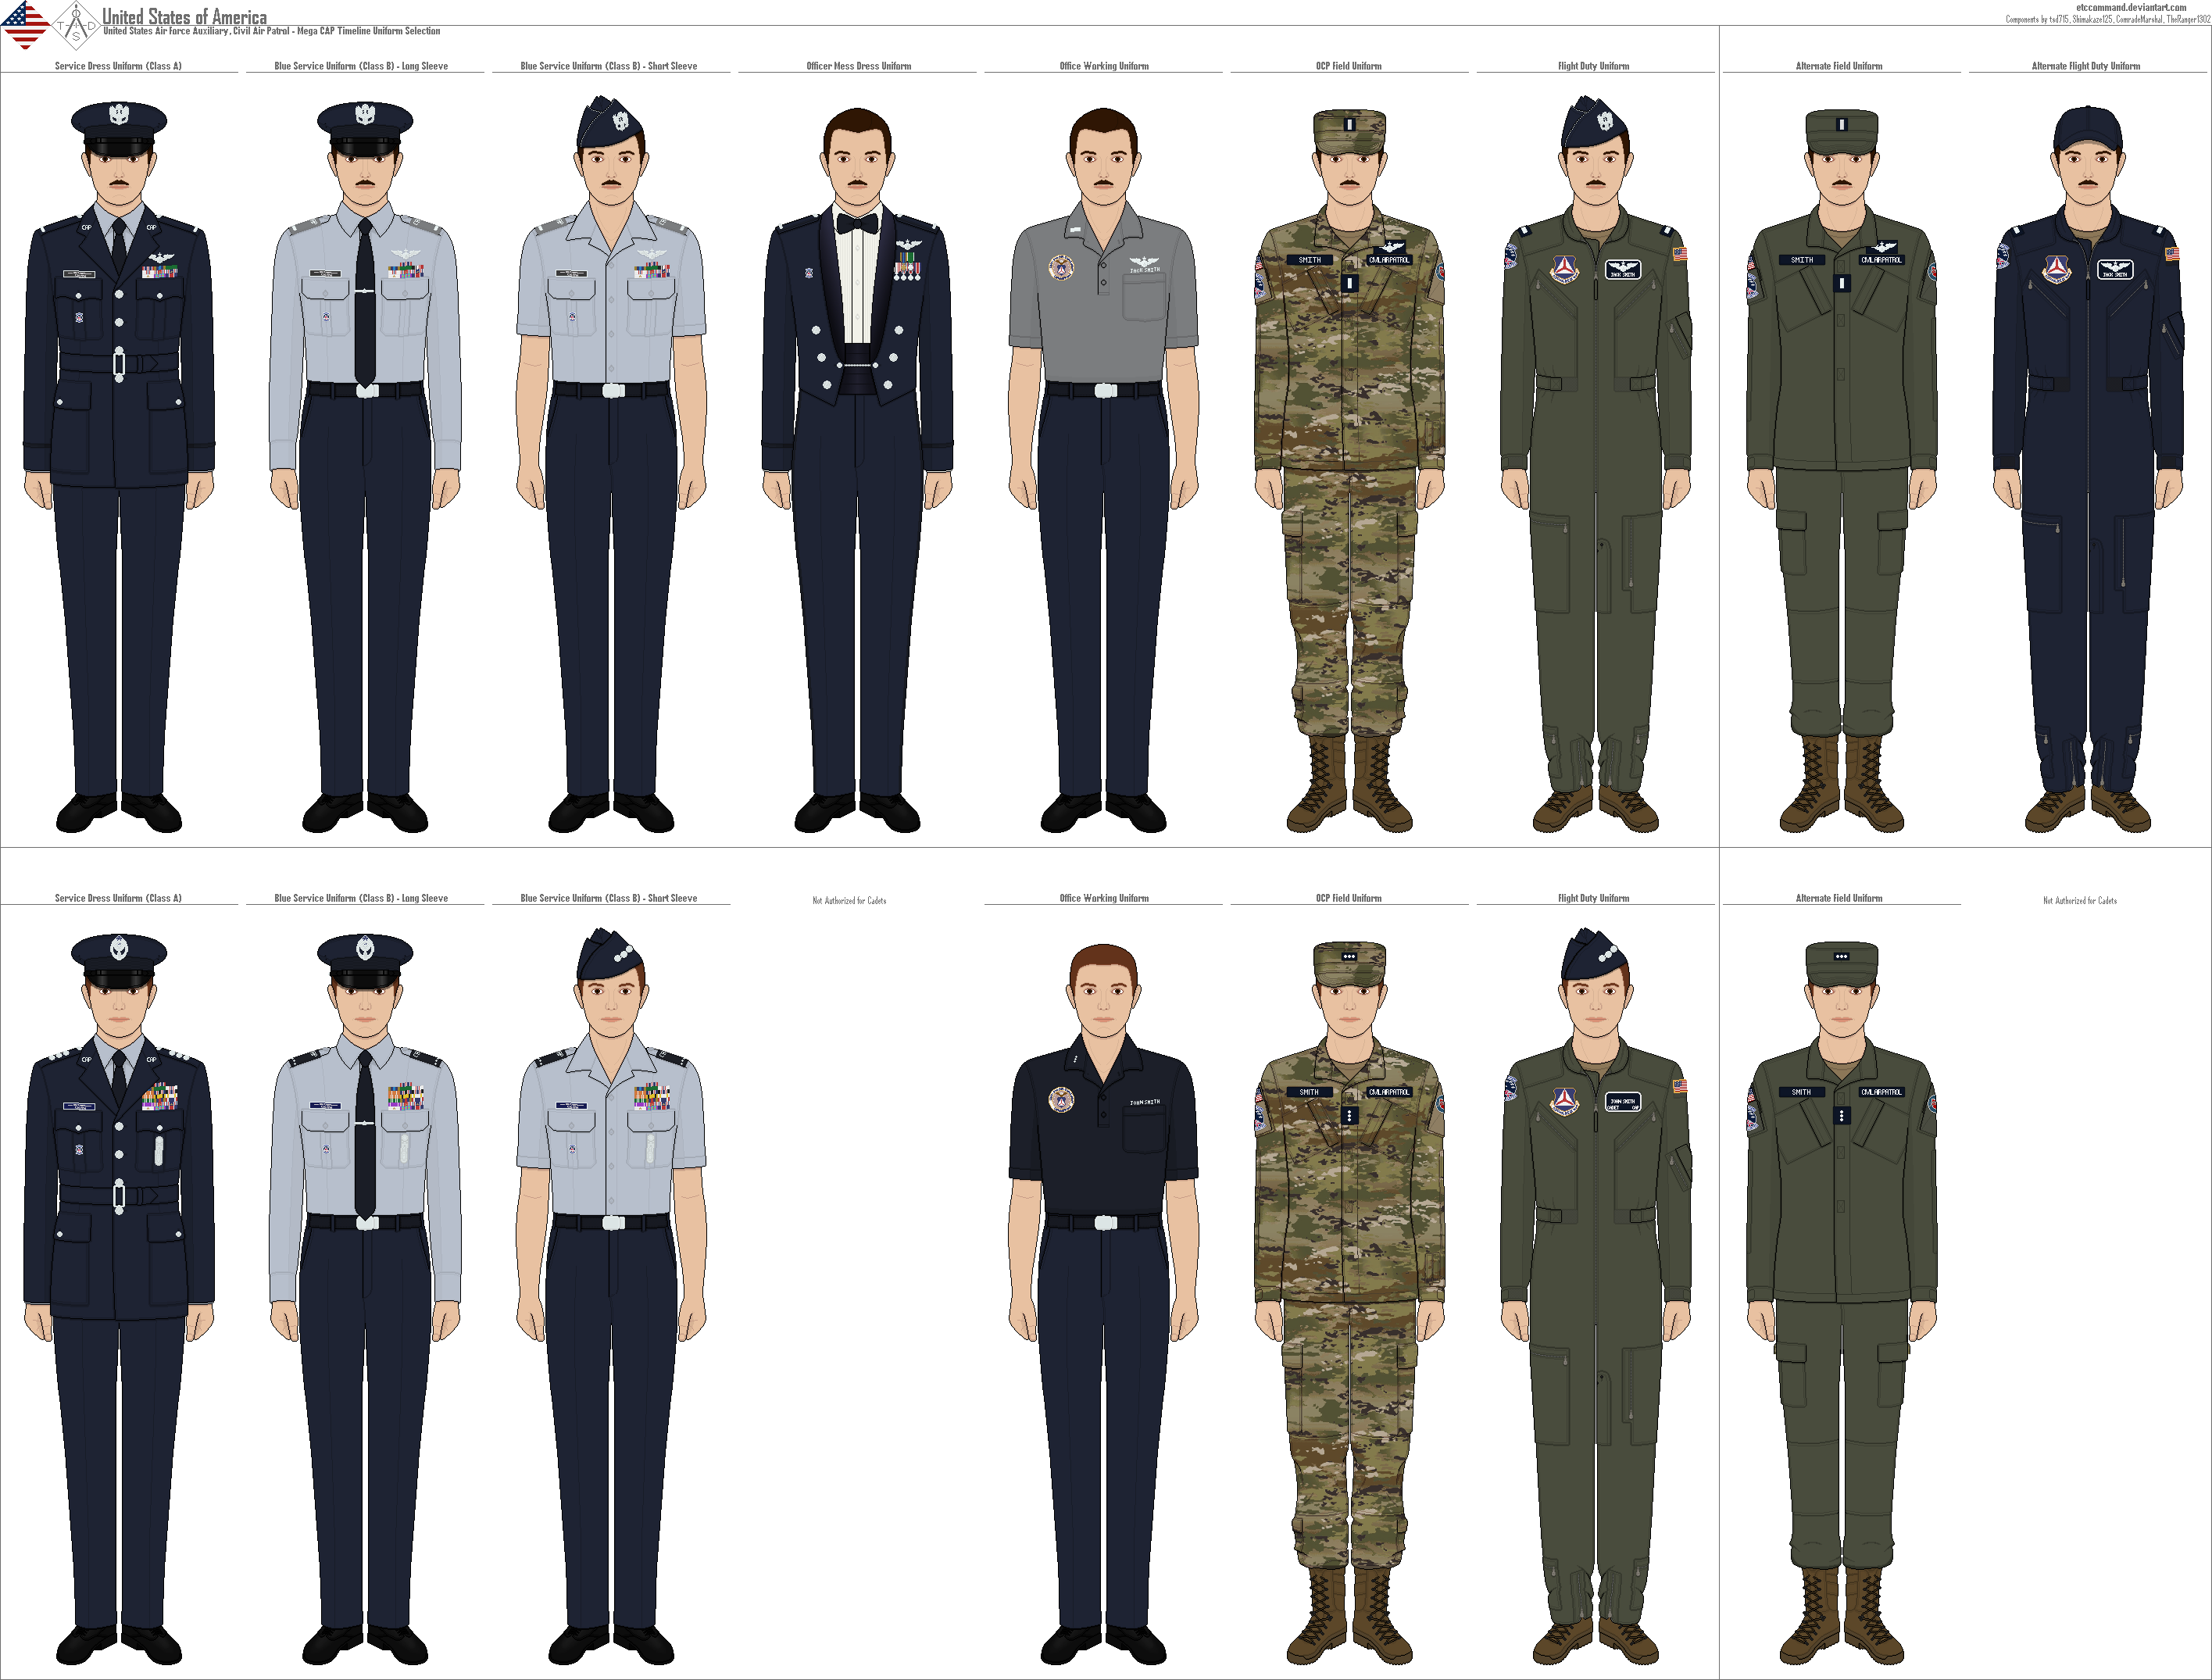 Uniforms  Civil Air Patrol